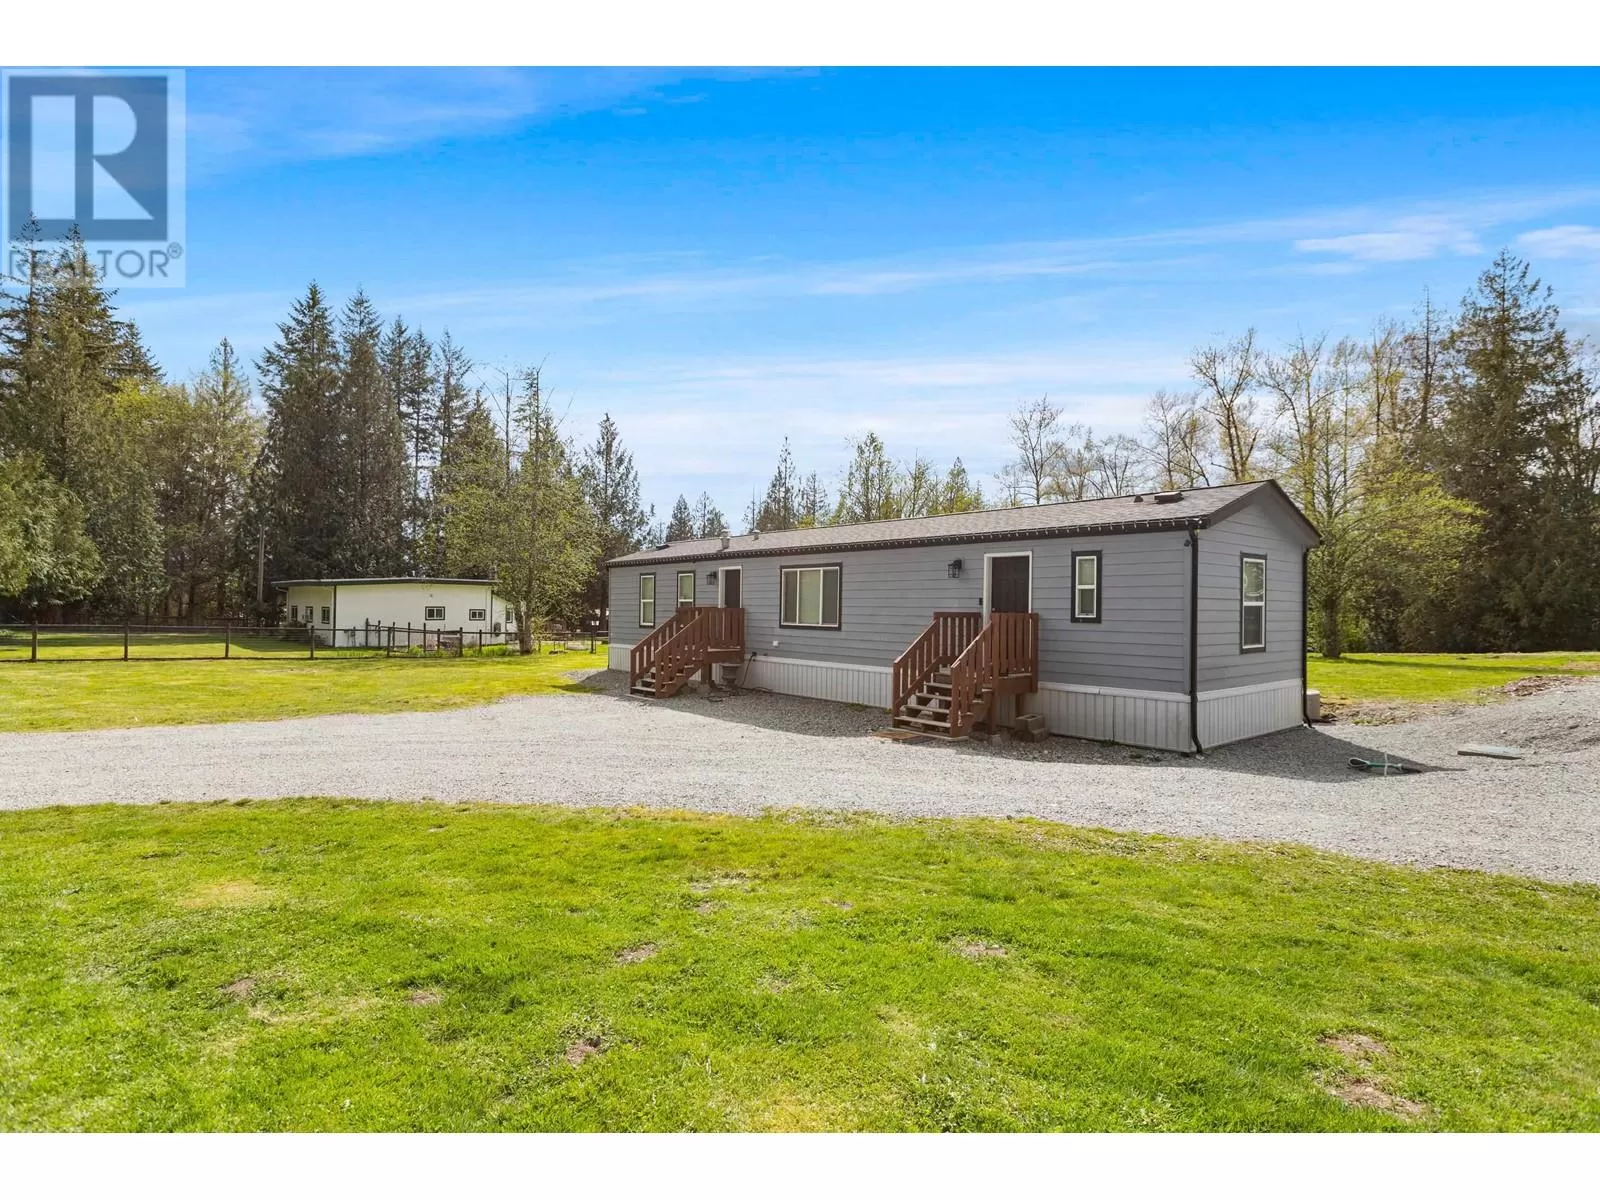 House for rent: 10543 277 Street, Maple Ridge, British Columbia V2W 1M7